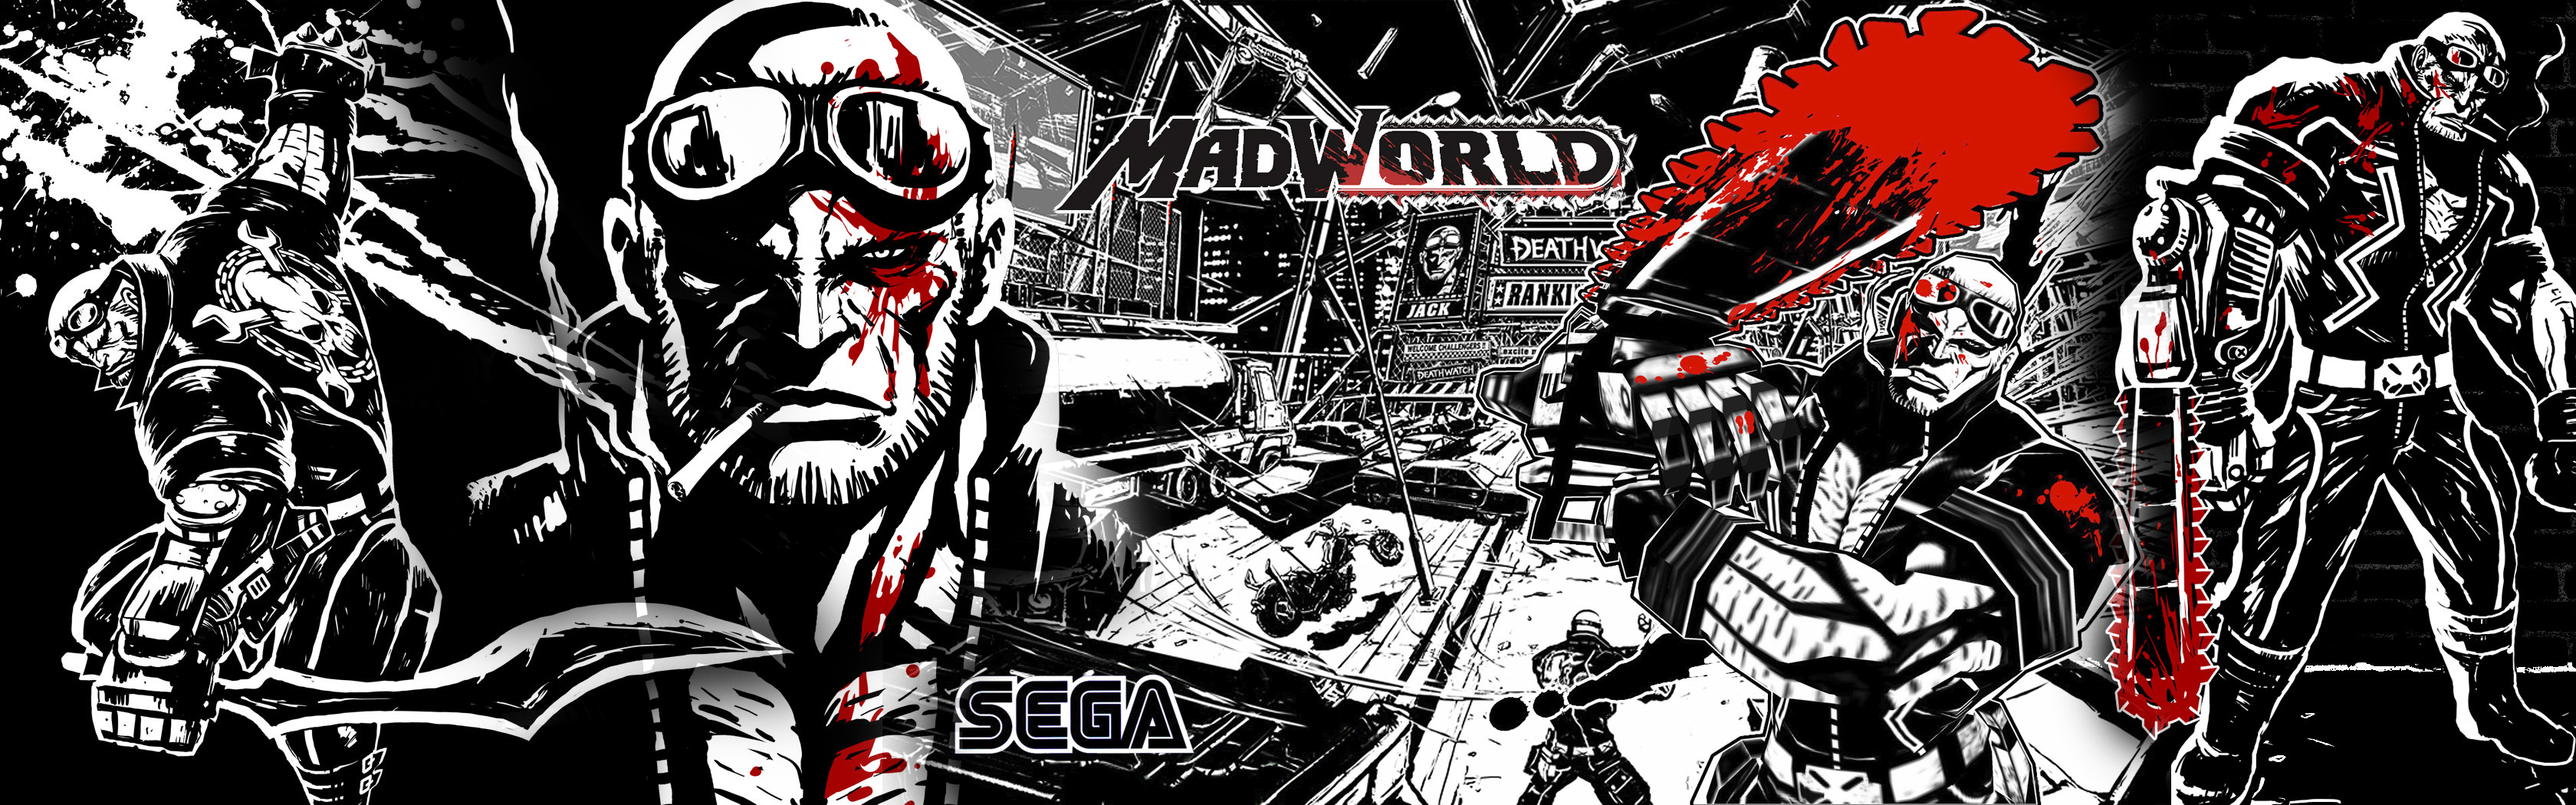 Madworld Wallpaper and Background Imagex1050